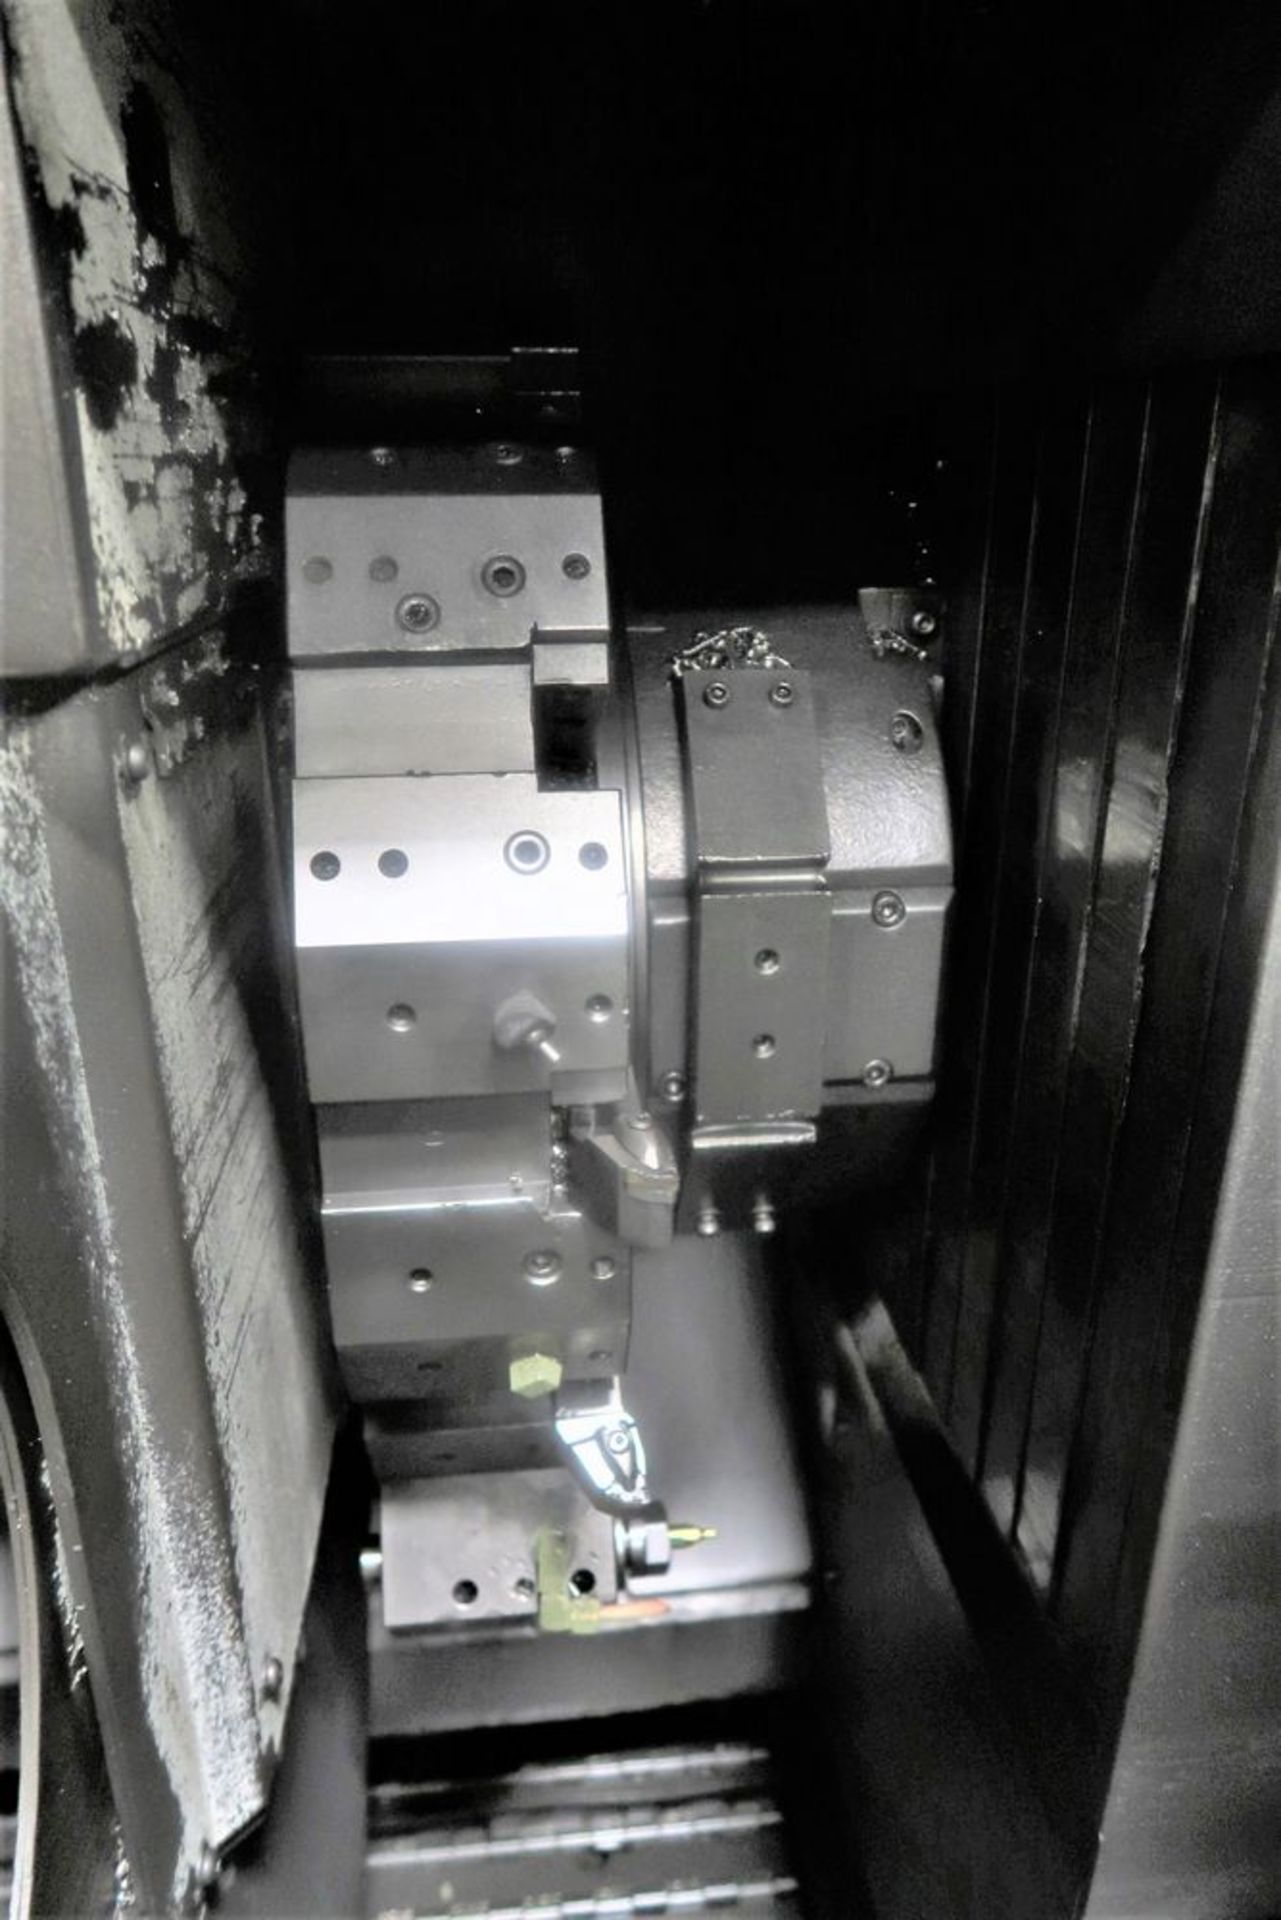 Mazak Dual Turn 20 Twin Spindle CNC Turning Center Lathe, S/N 141828 - Image 7 of 11